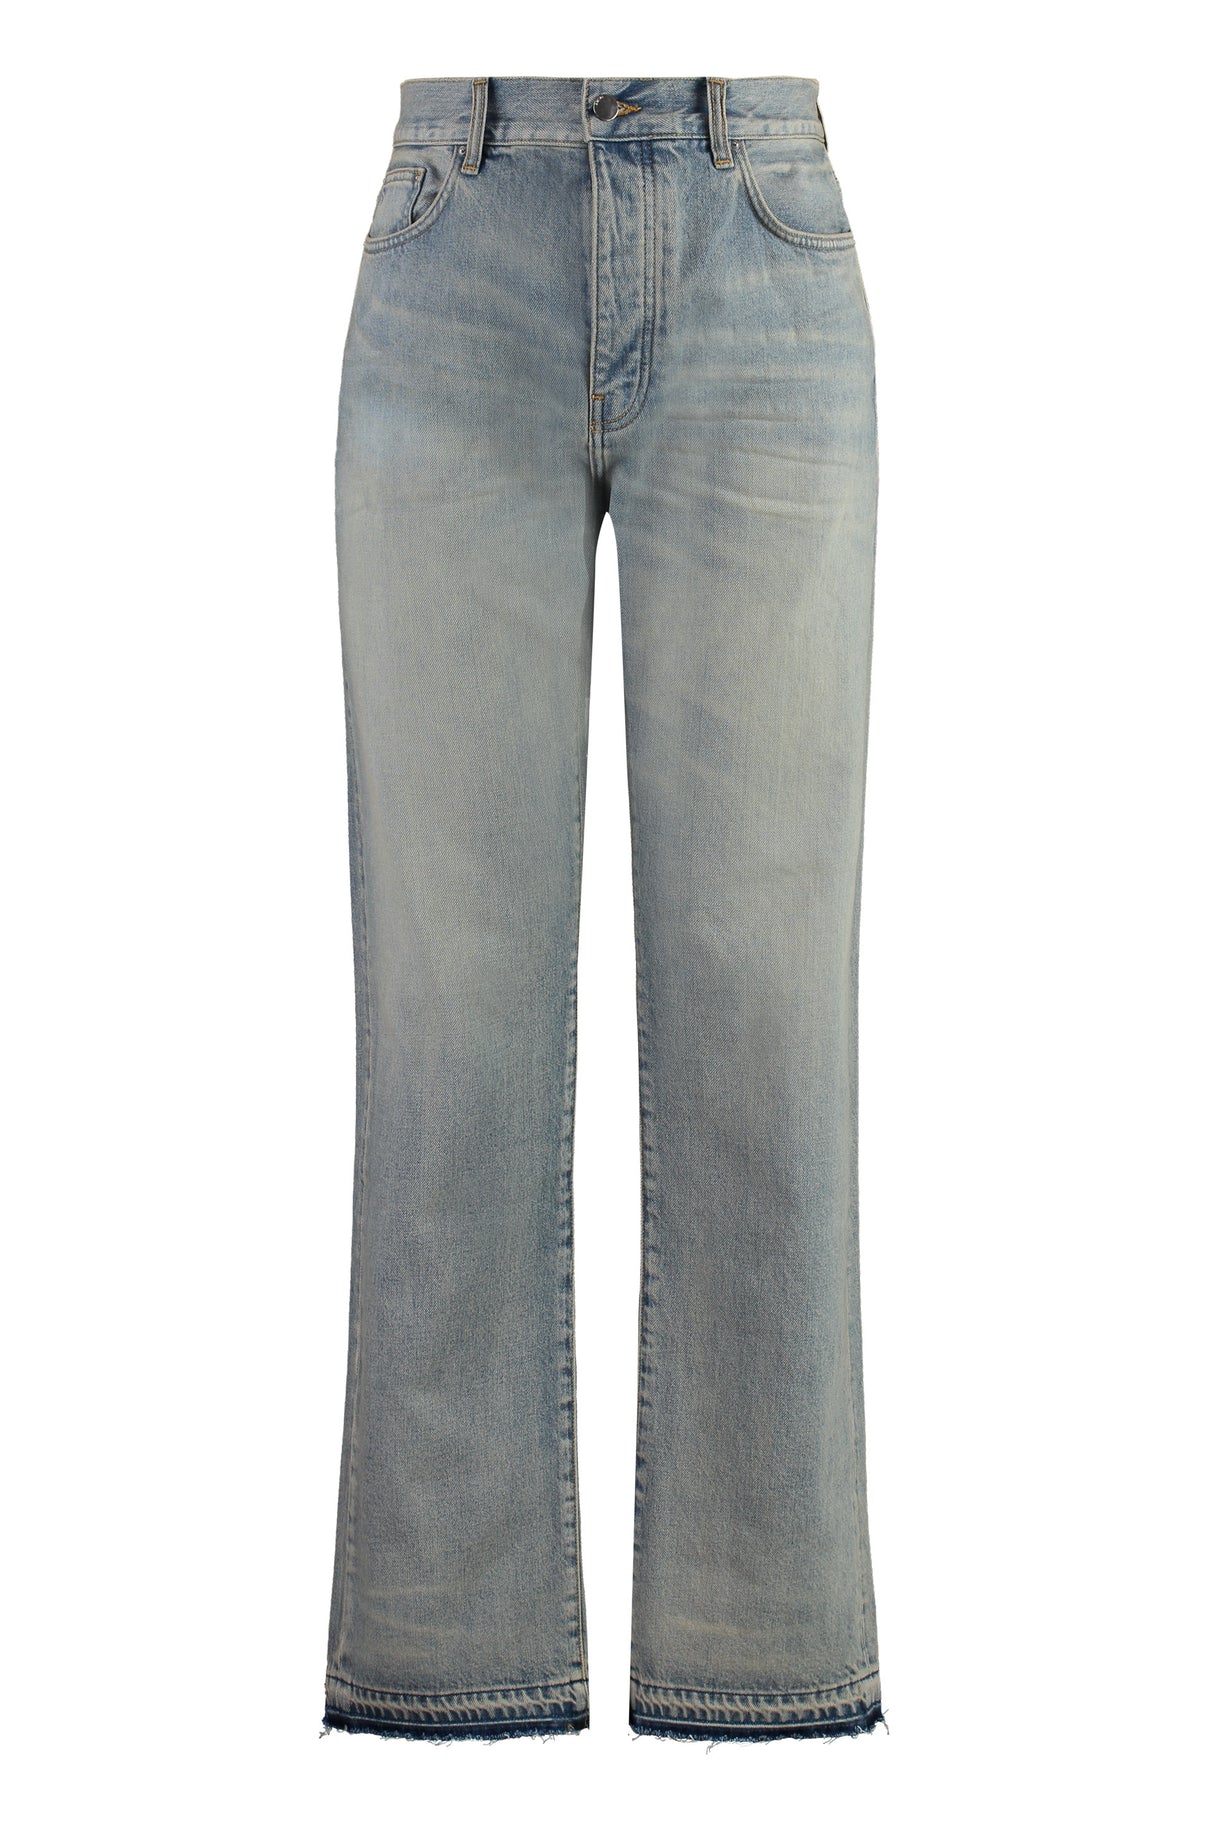 Vintage Quần Jeans Thẳng Nam